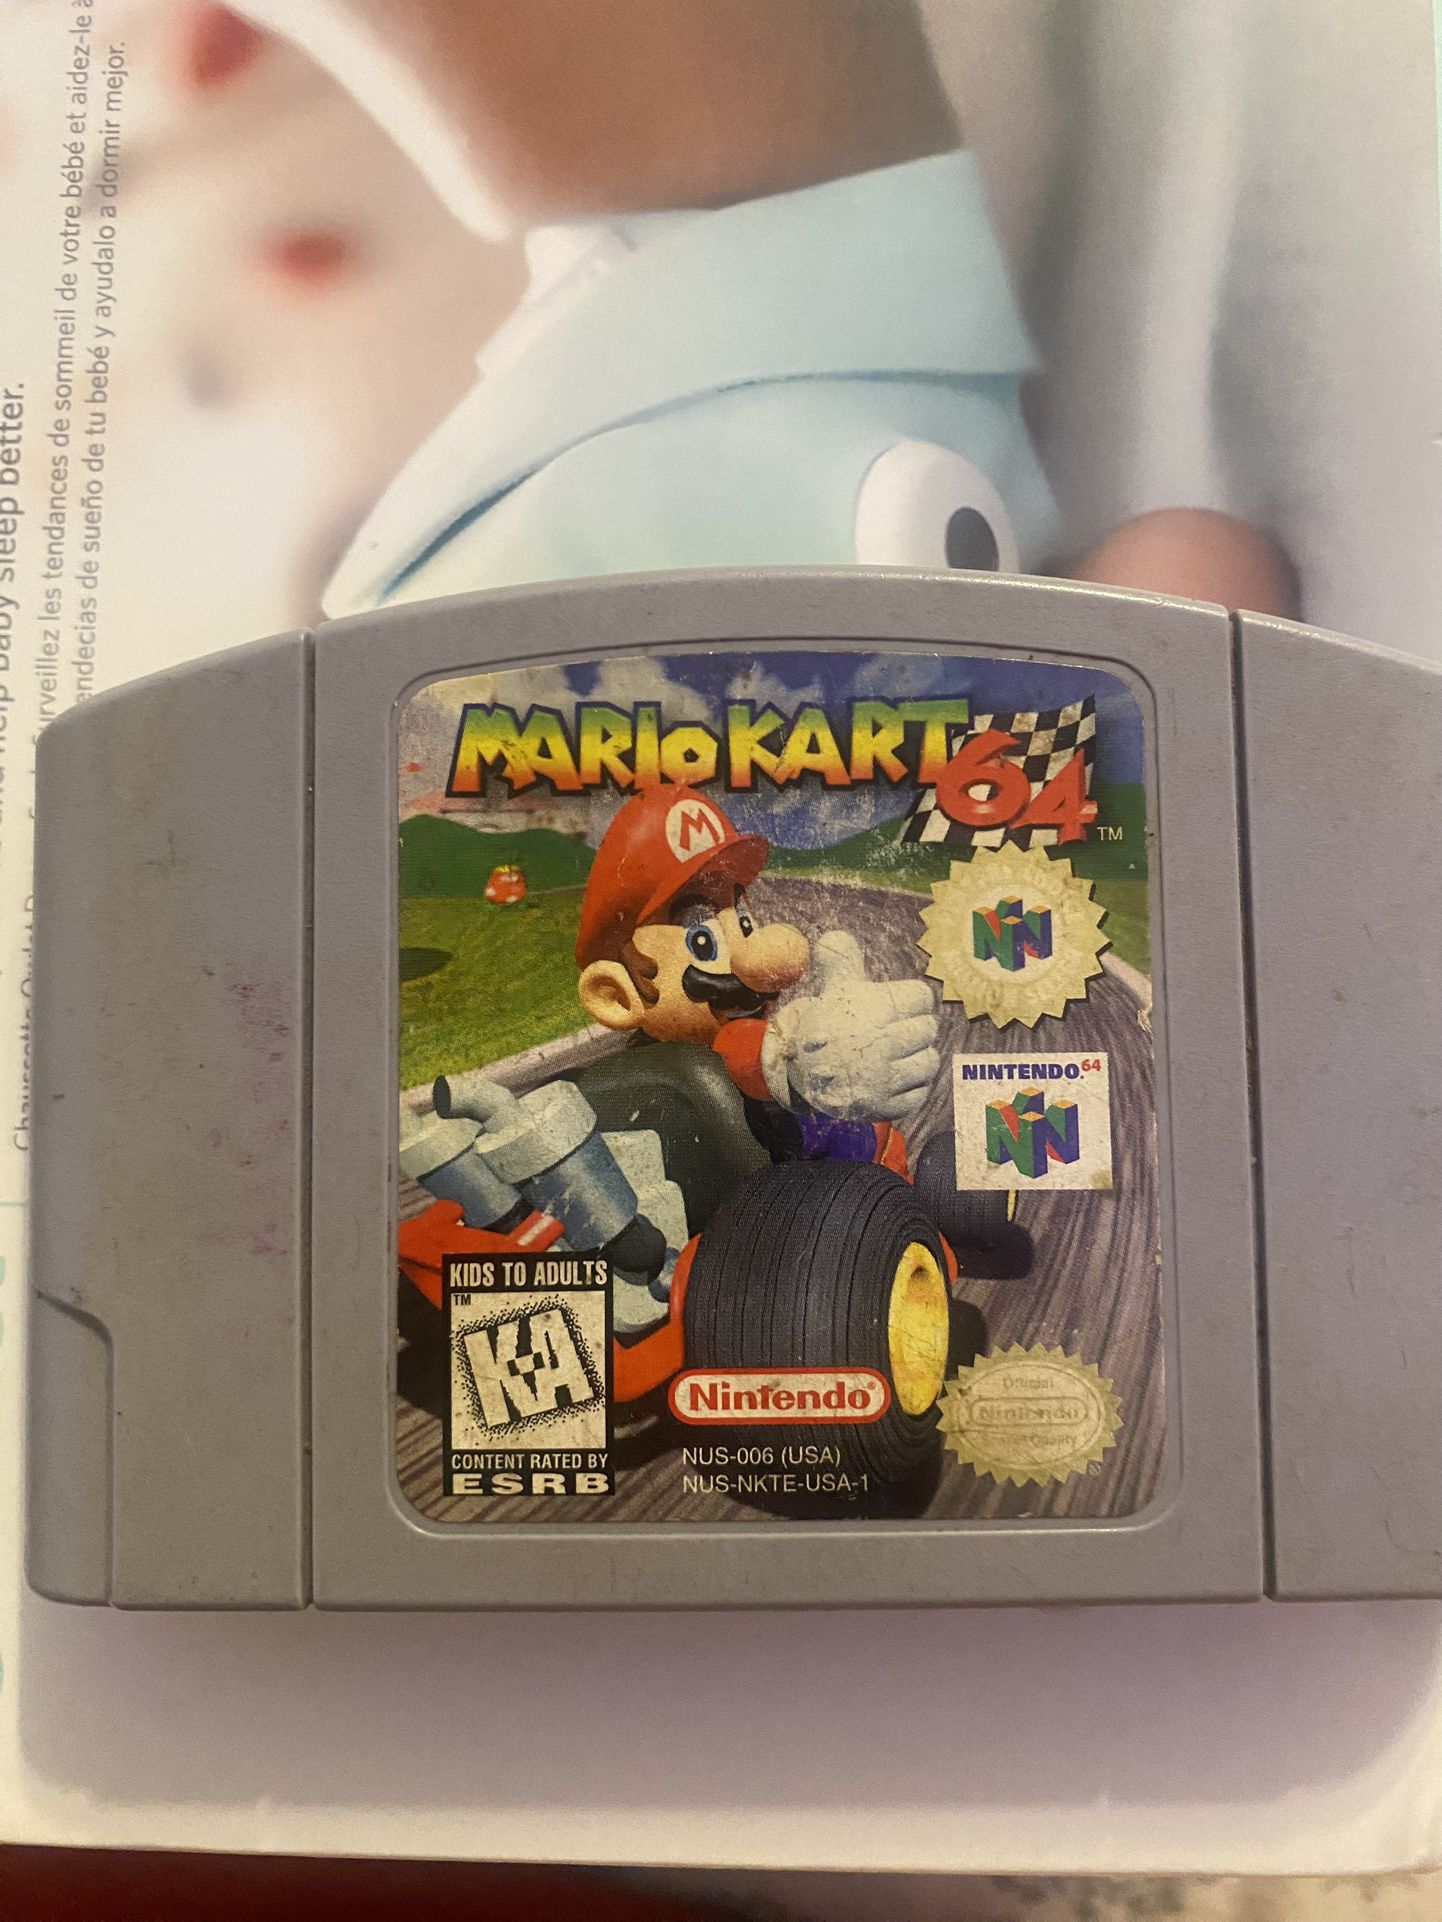 Mario Kart 64 (Nintendo 64, 1997) N64 Authentic Cartridge Only